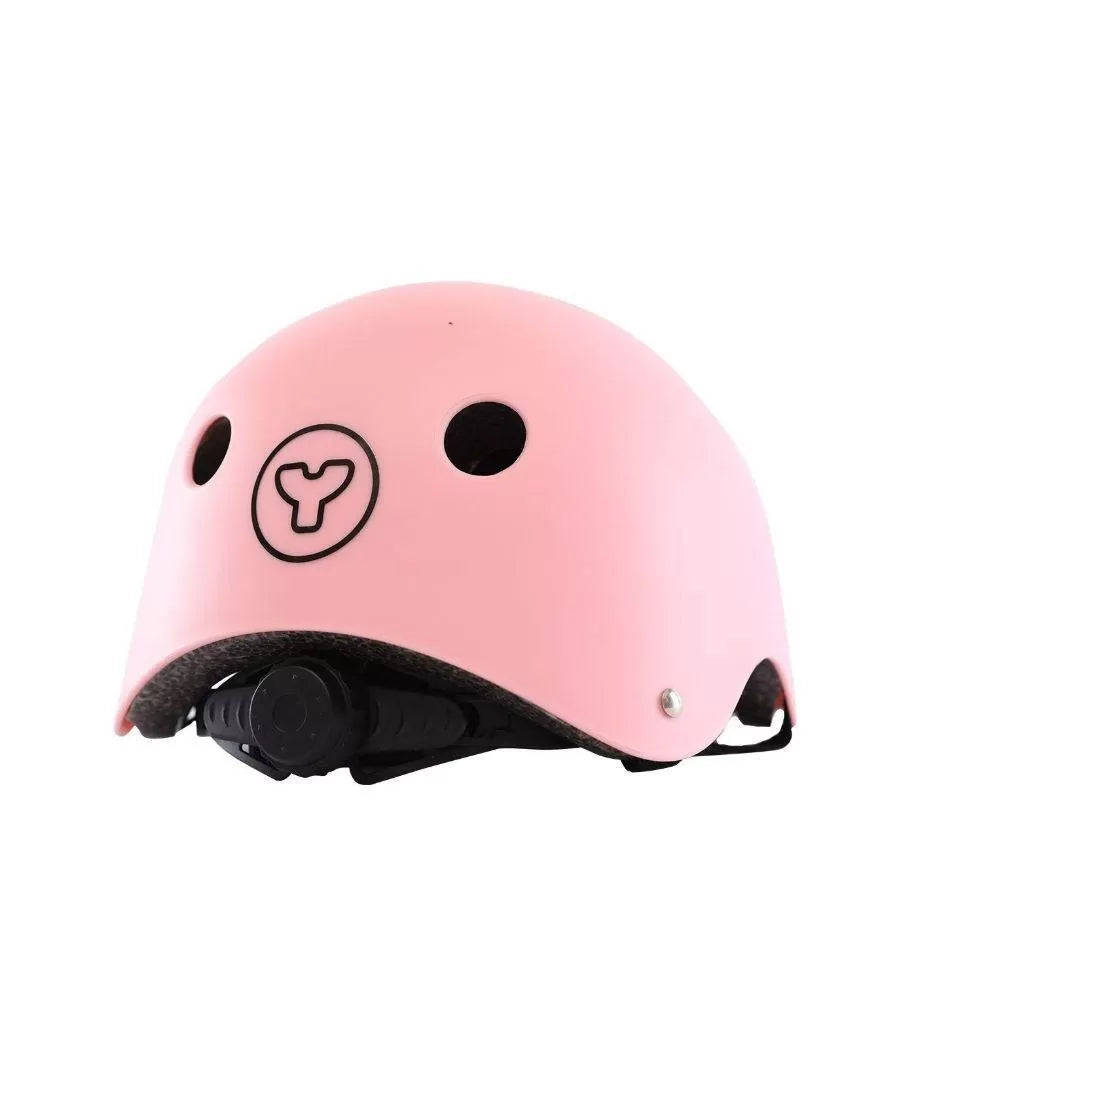 Yvolution Helmet Small - Pink